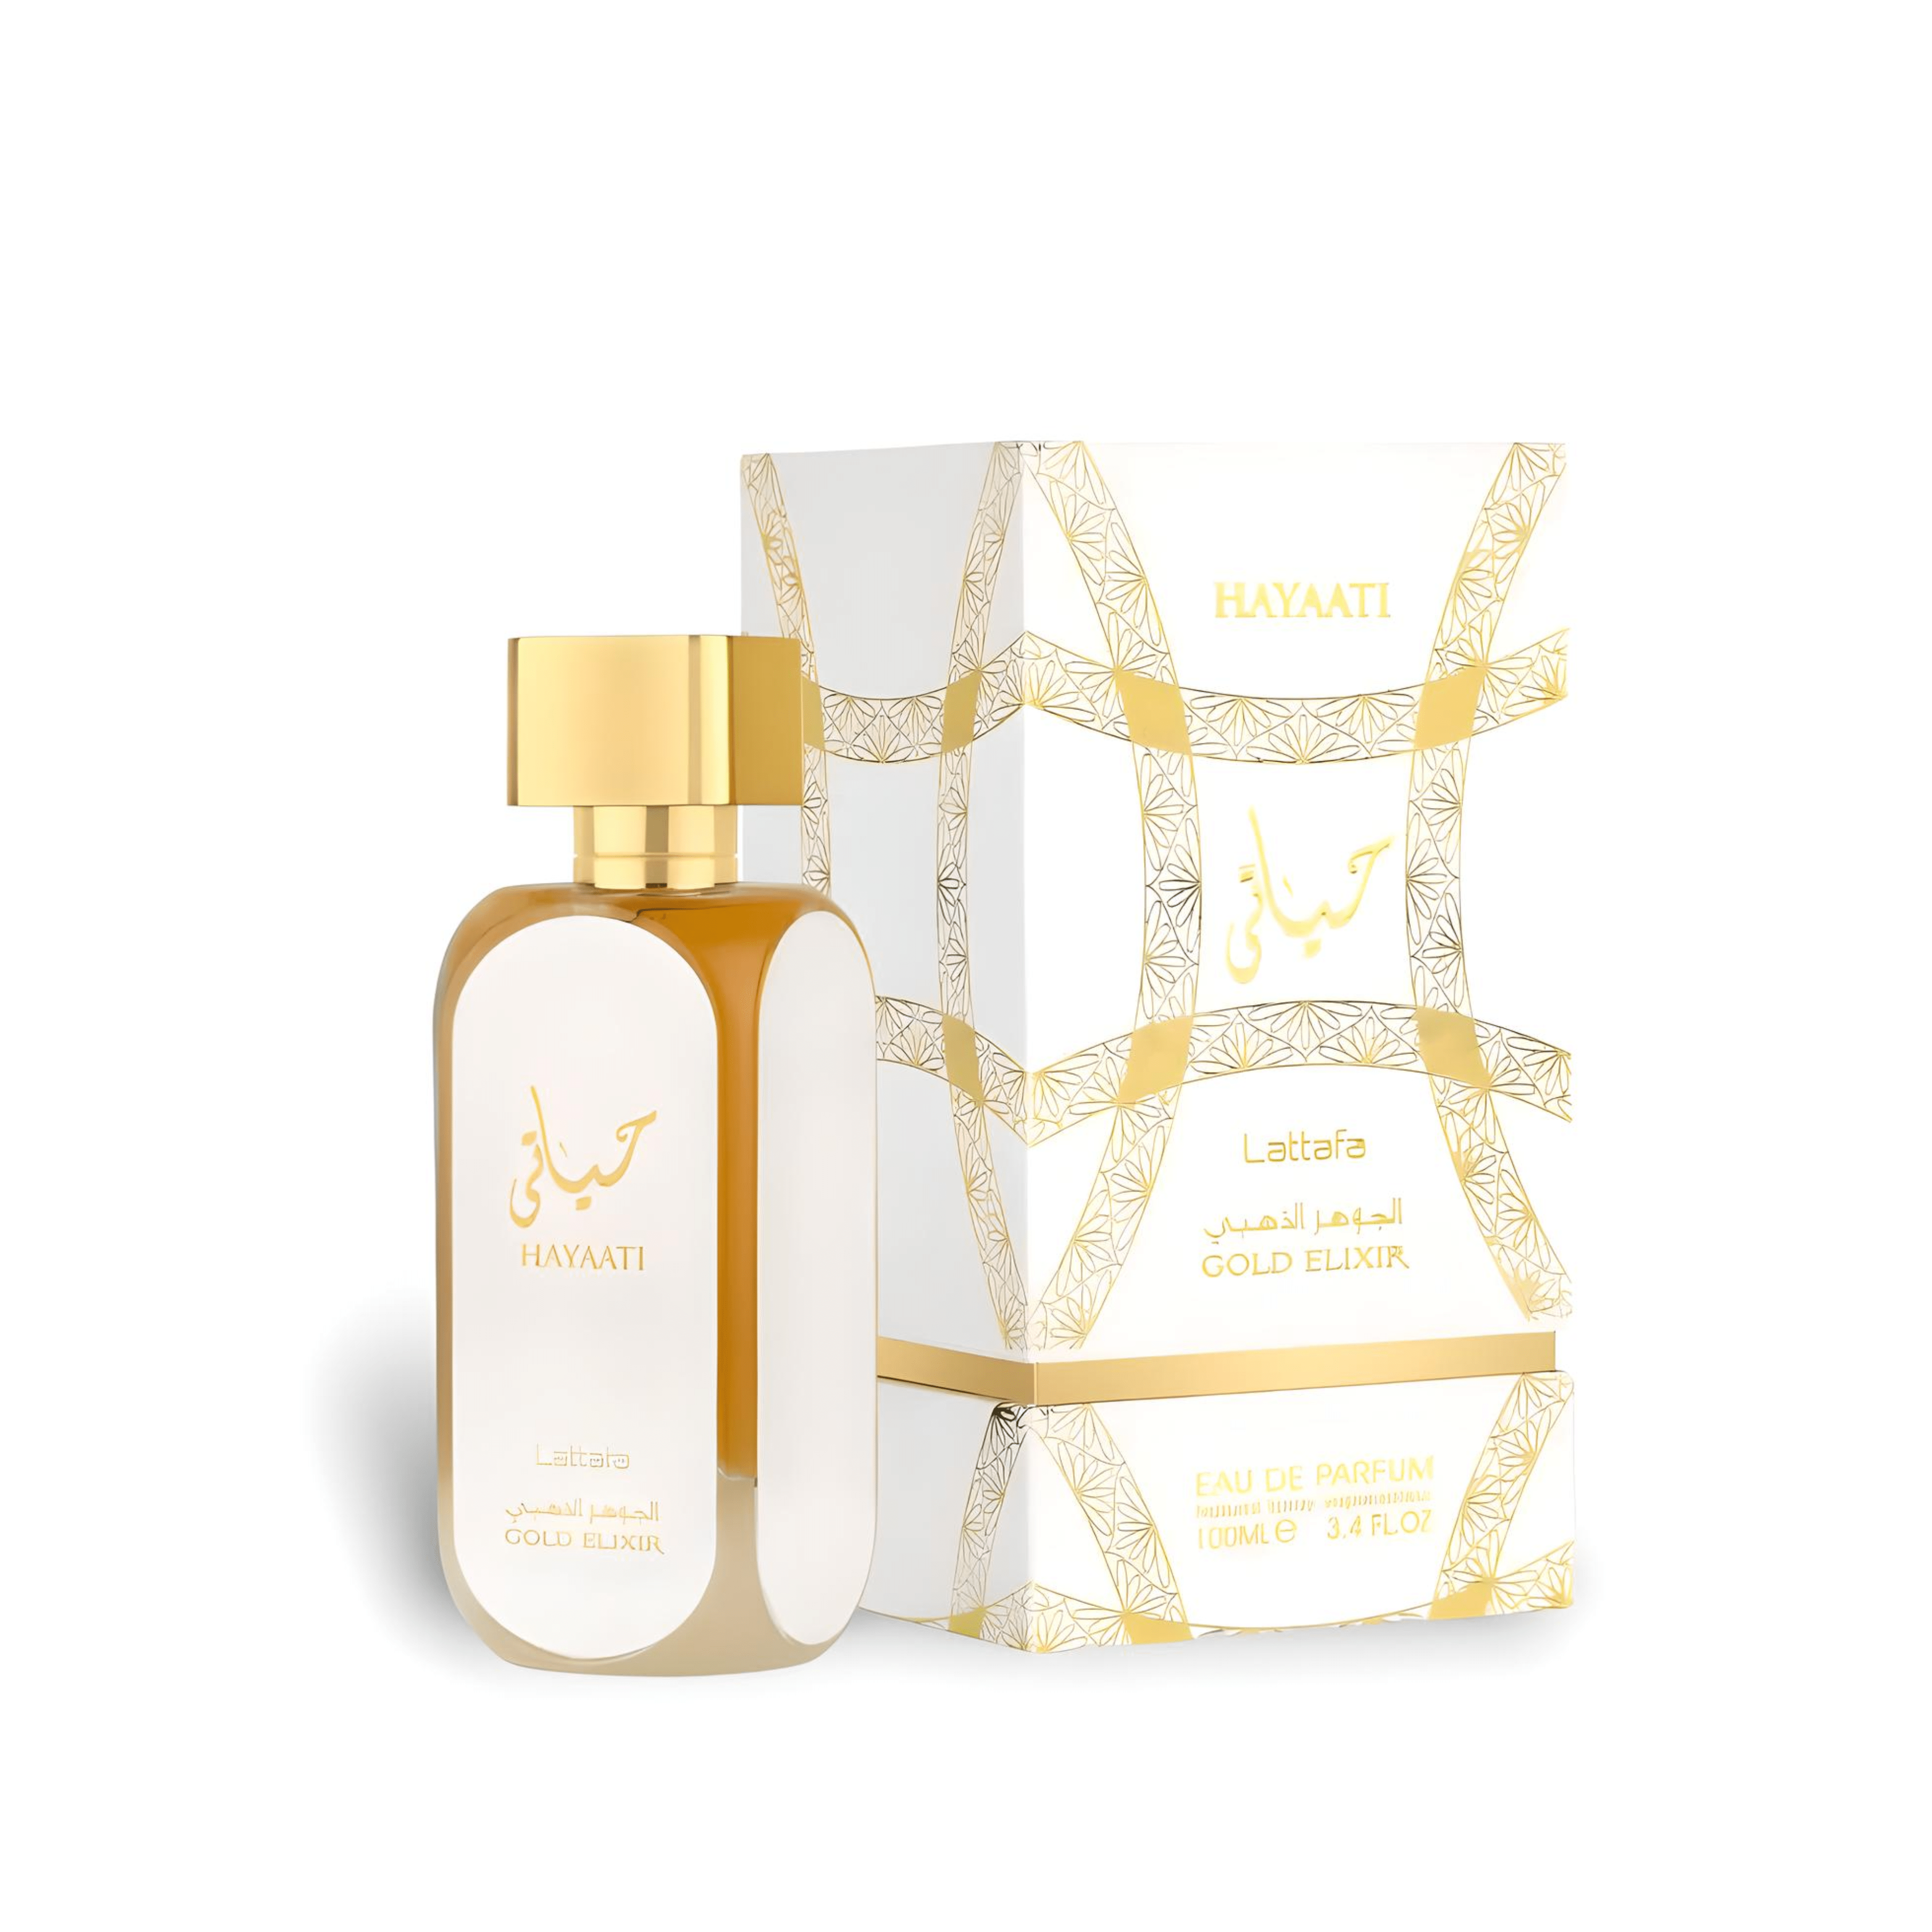 Hayaati Gold Elixir Perfume / Eau De Parfum 100Ml By Lattafa